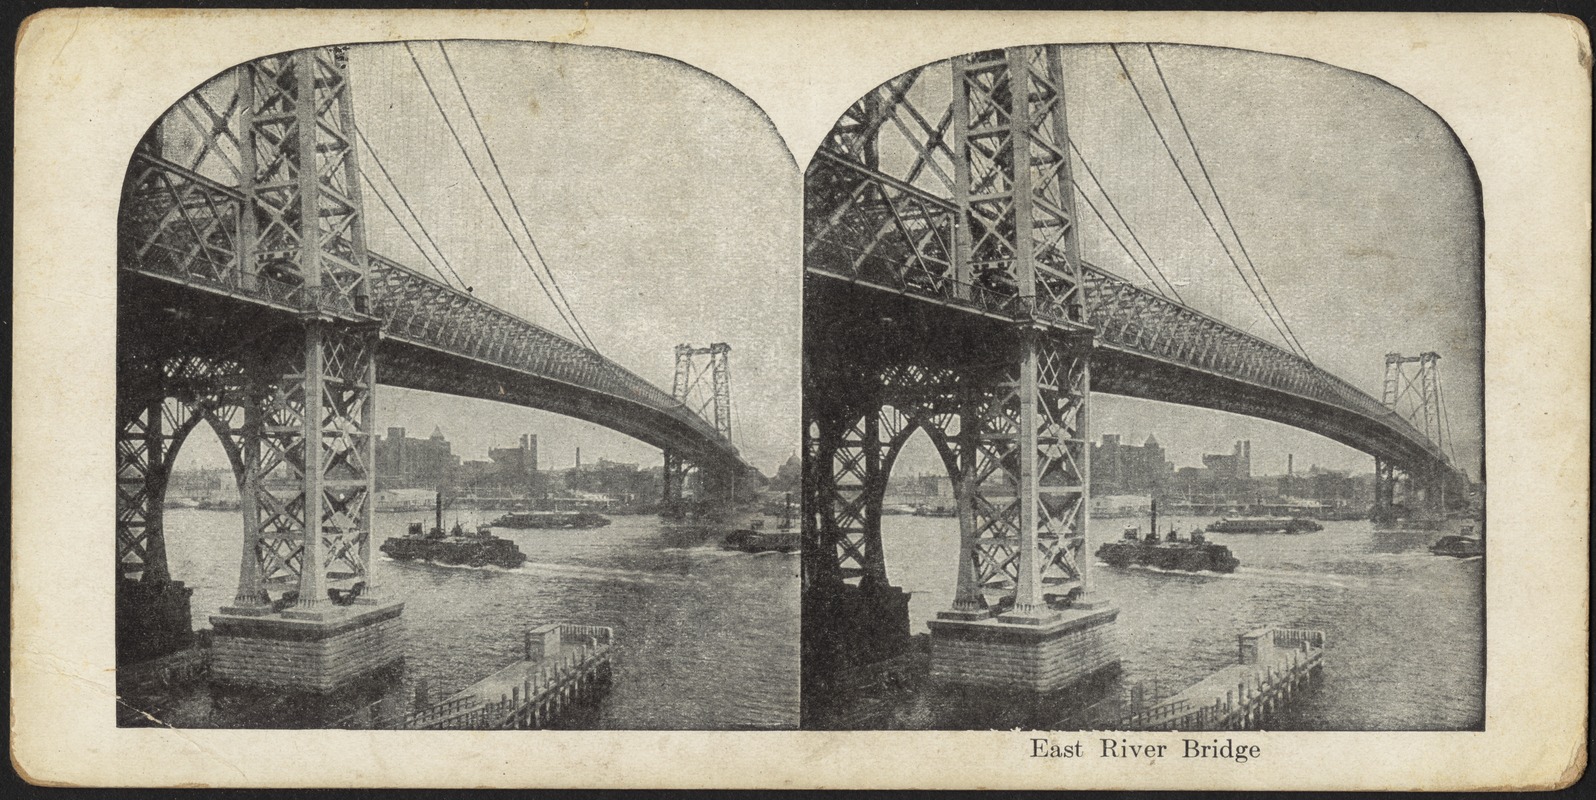 East River bridge